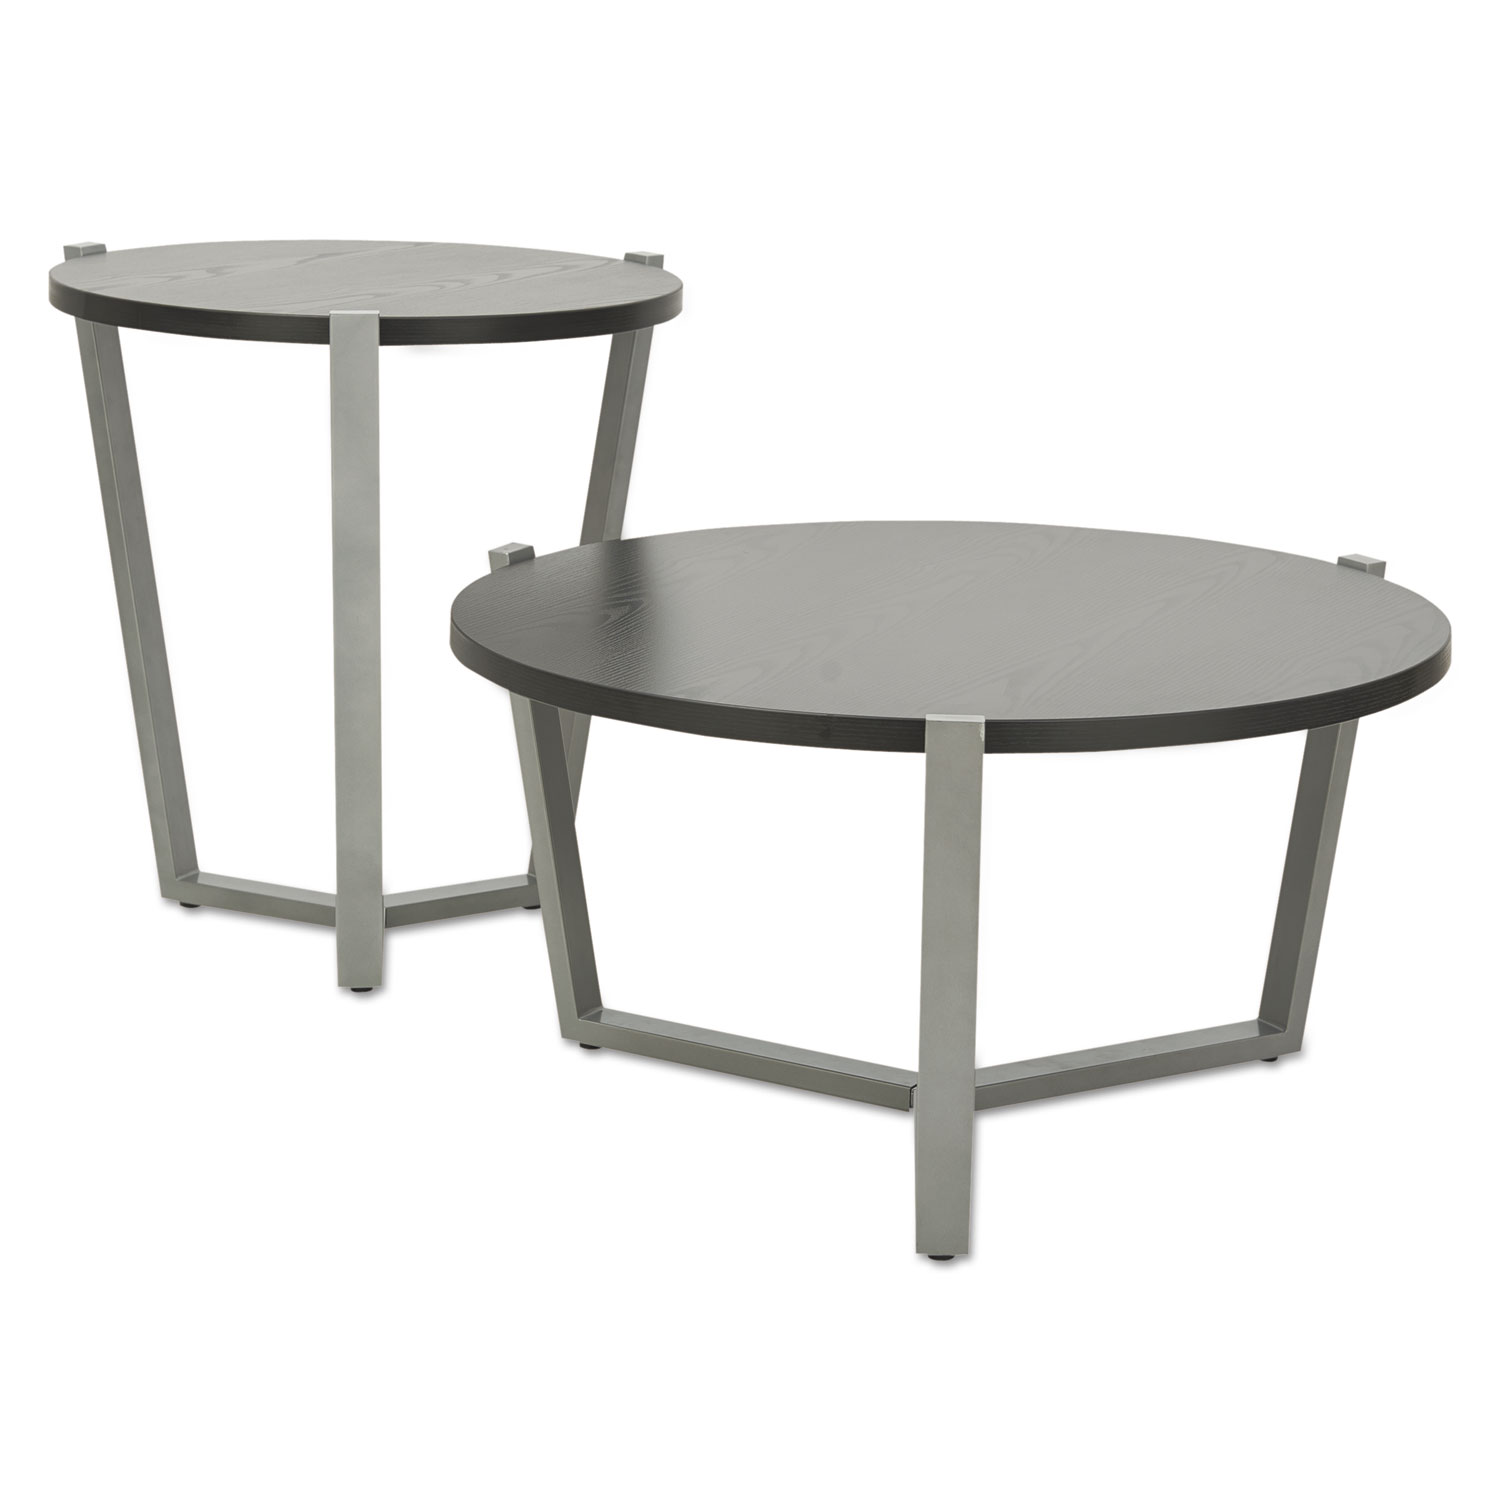 Round Occasional Corner Table, 21 1/4 dia x 22 3/4h, Black/Silver